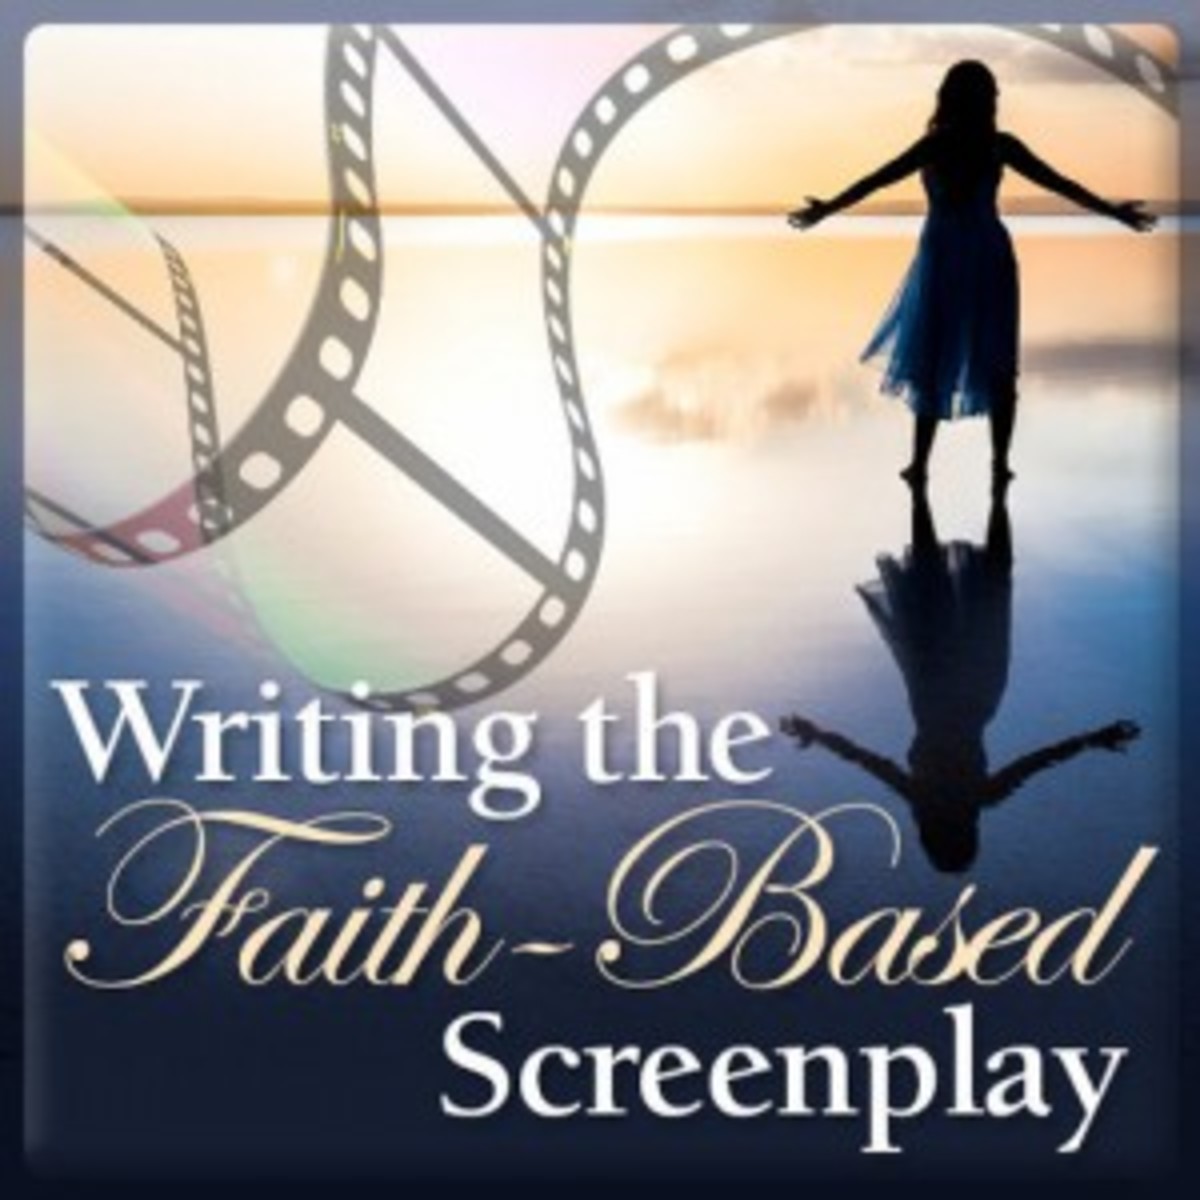 ws_faithbasedscreenplay-500_medium